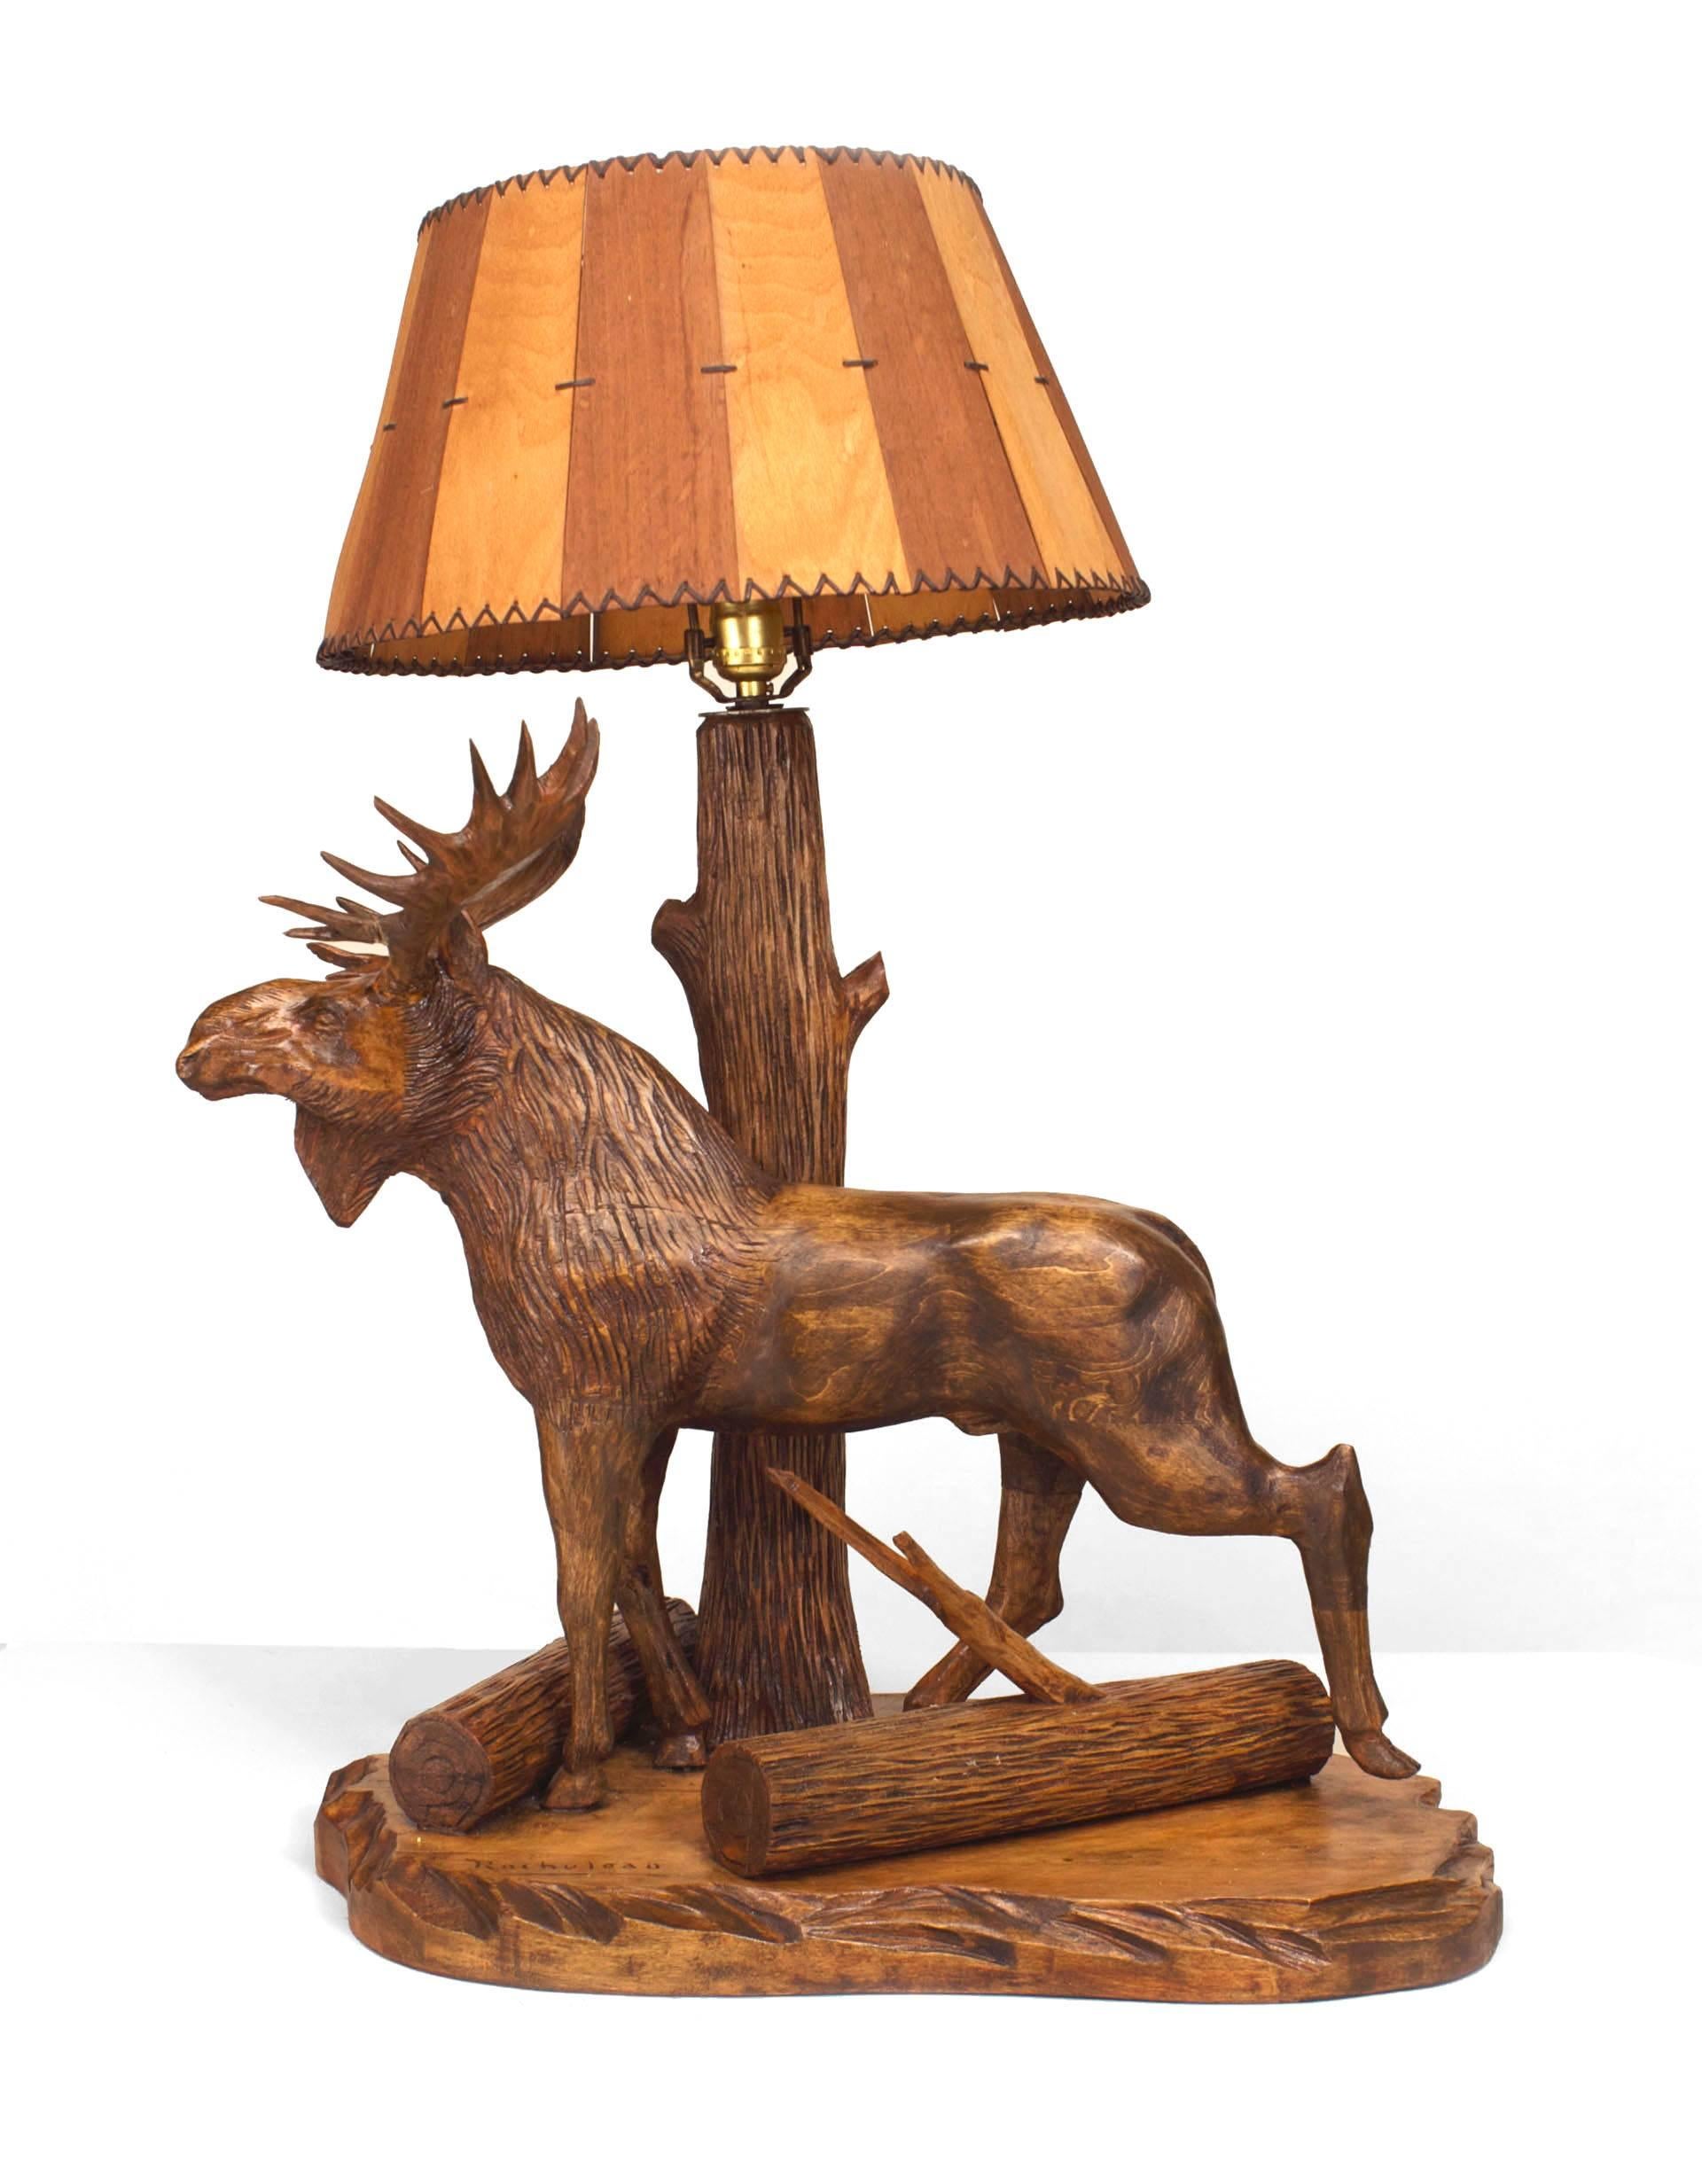 Rustic Maple Moose Form Table Lamp, Moose Lamp Shade Set